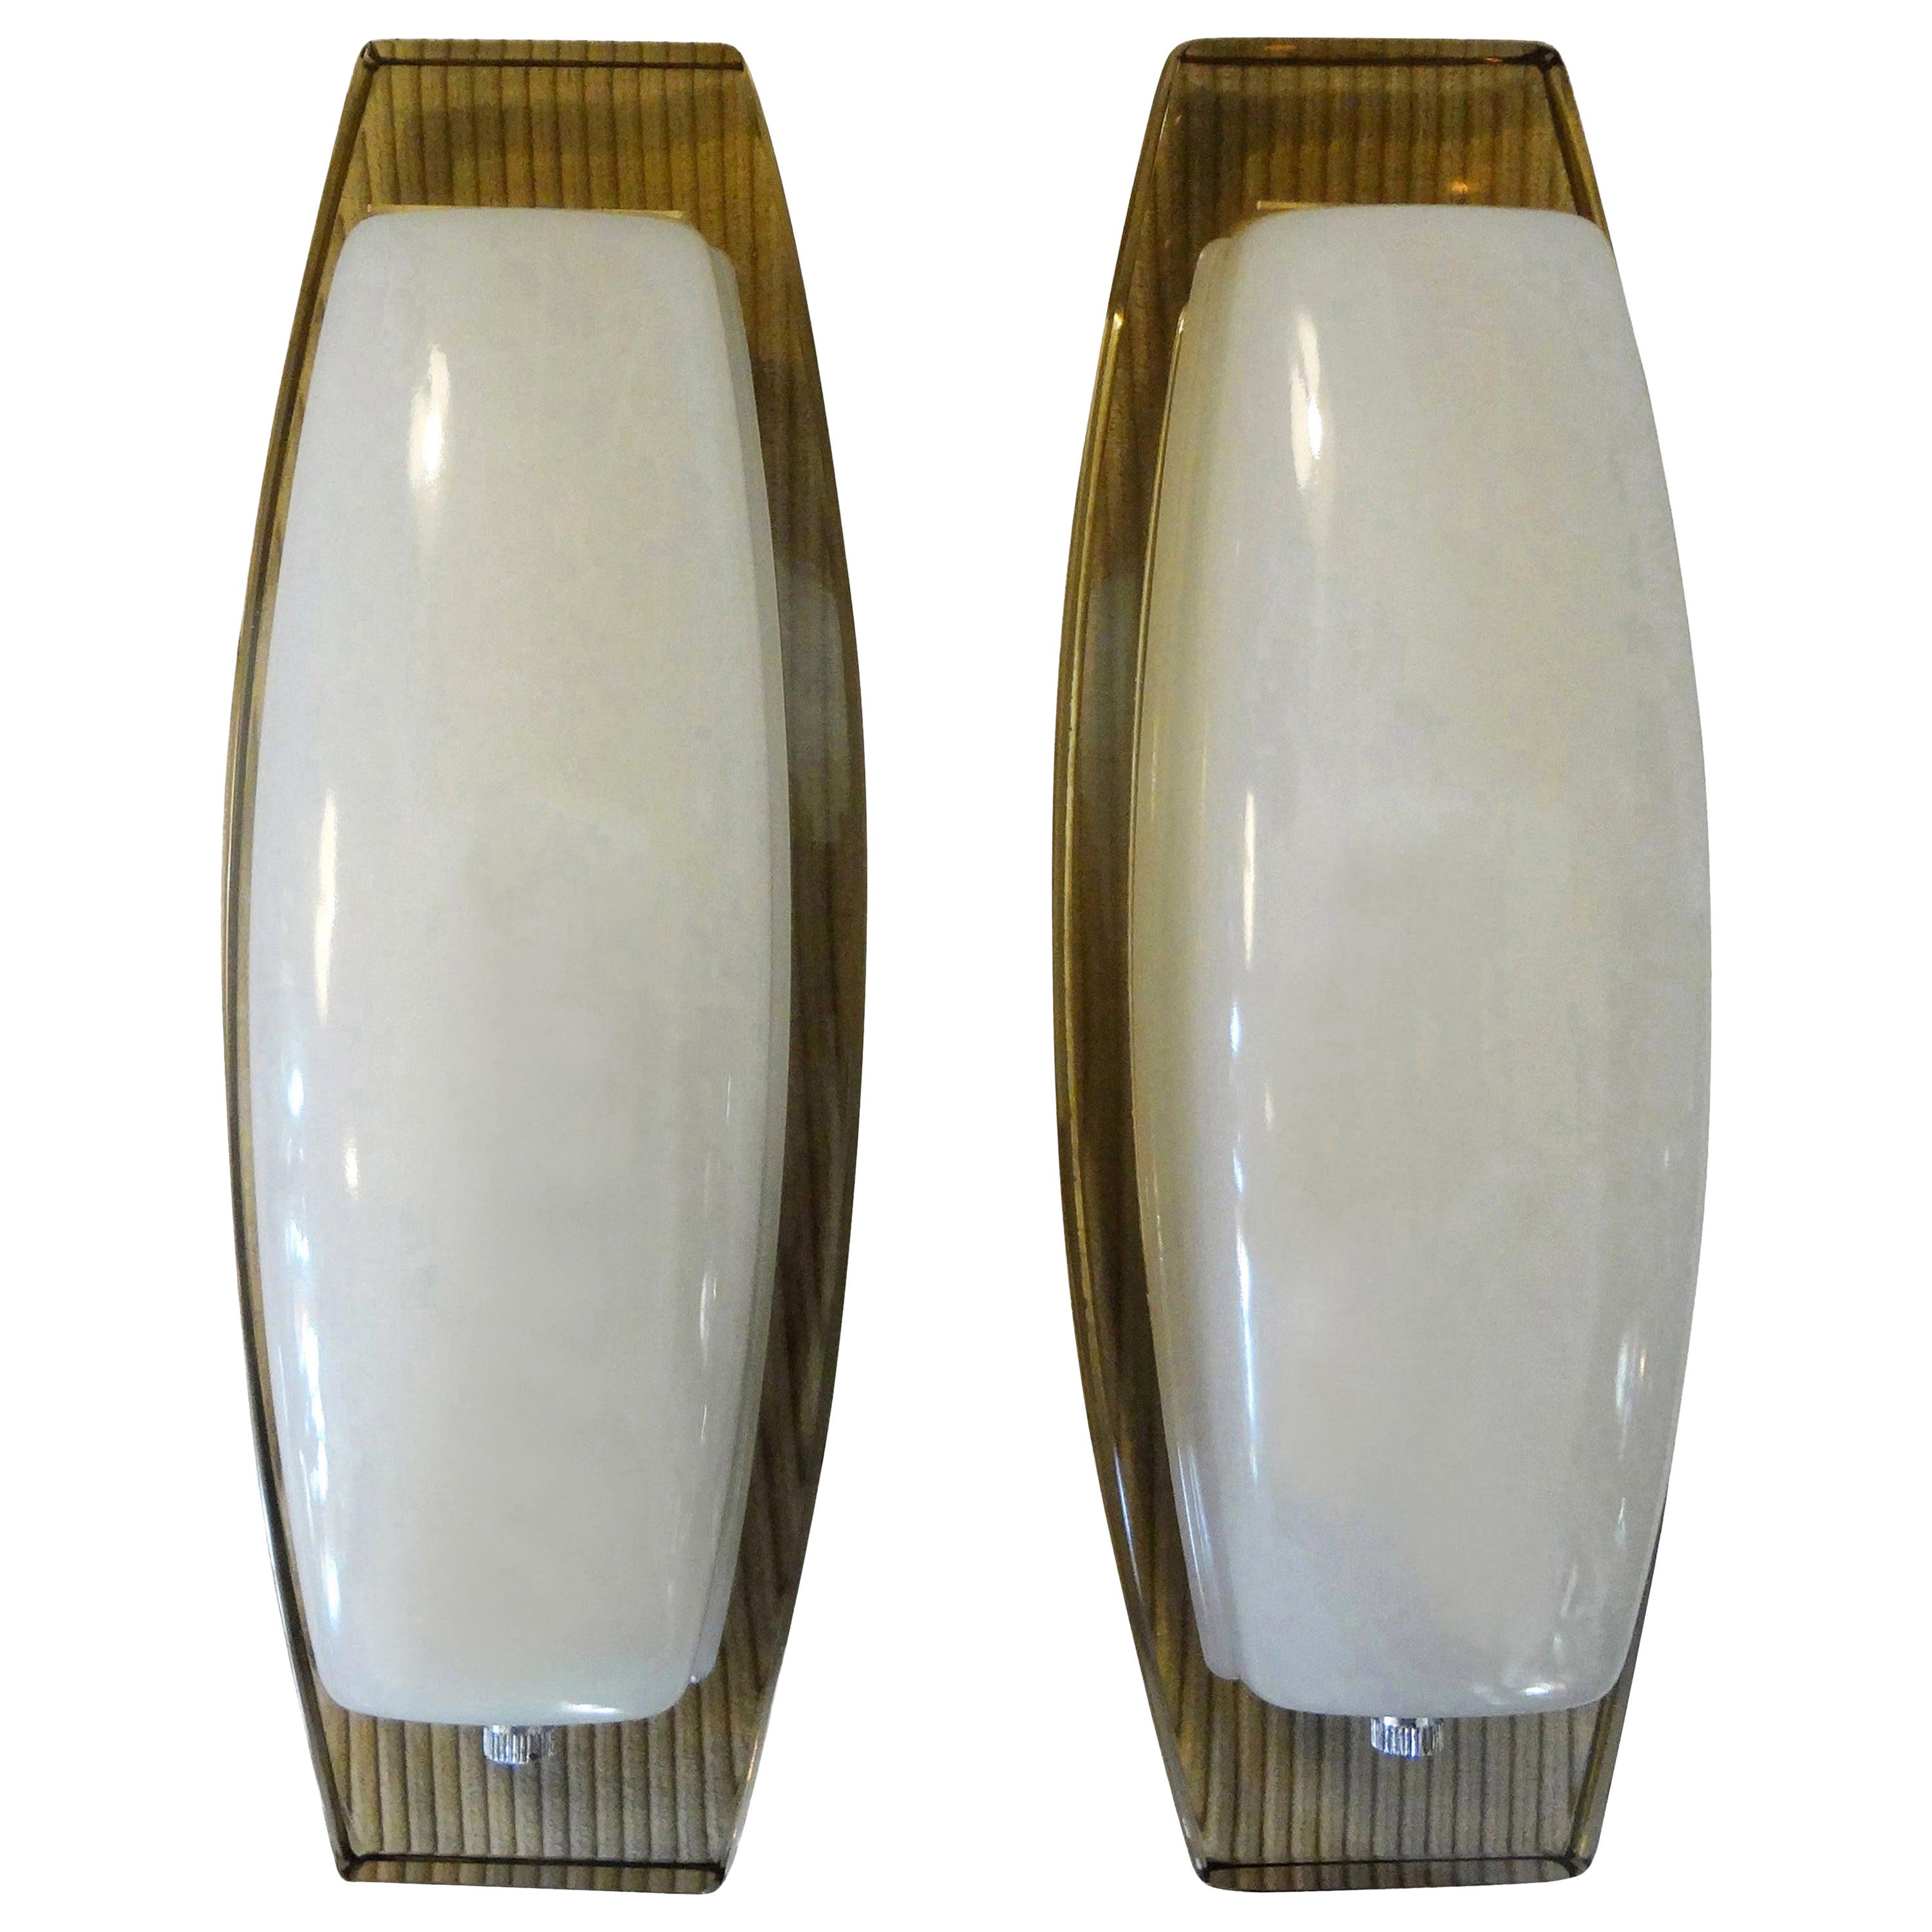 Pair of Italian Fontana Arte Style Glass Sconces